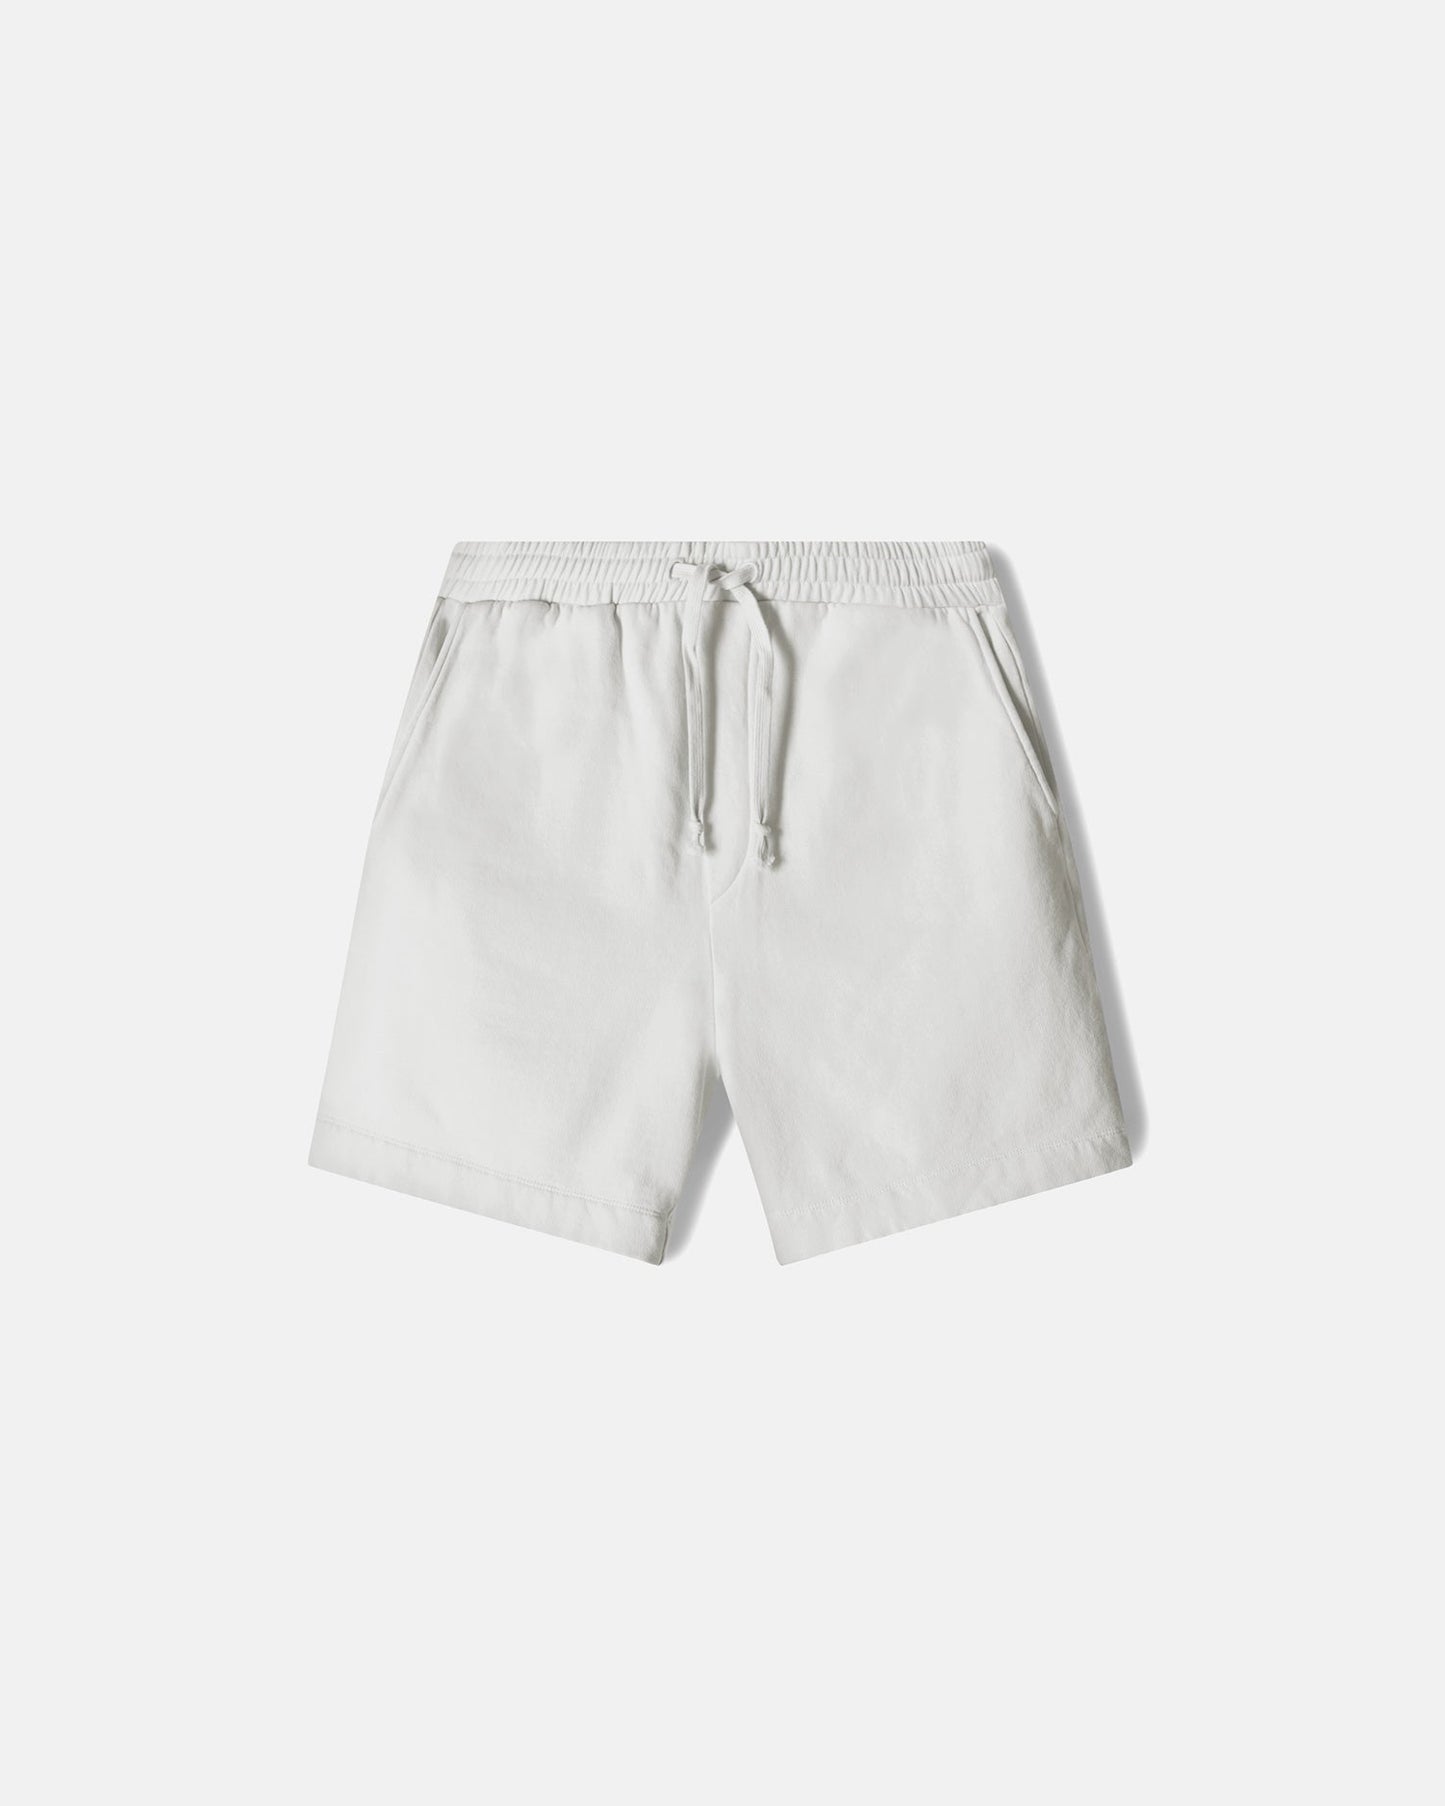 Doxxi - Organically Grown Cotton Shorts - Grey